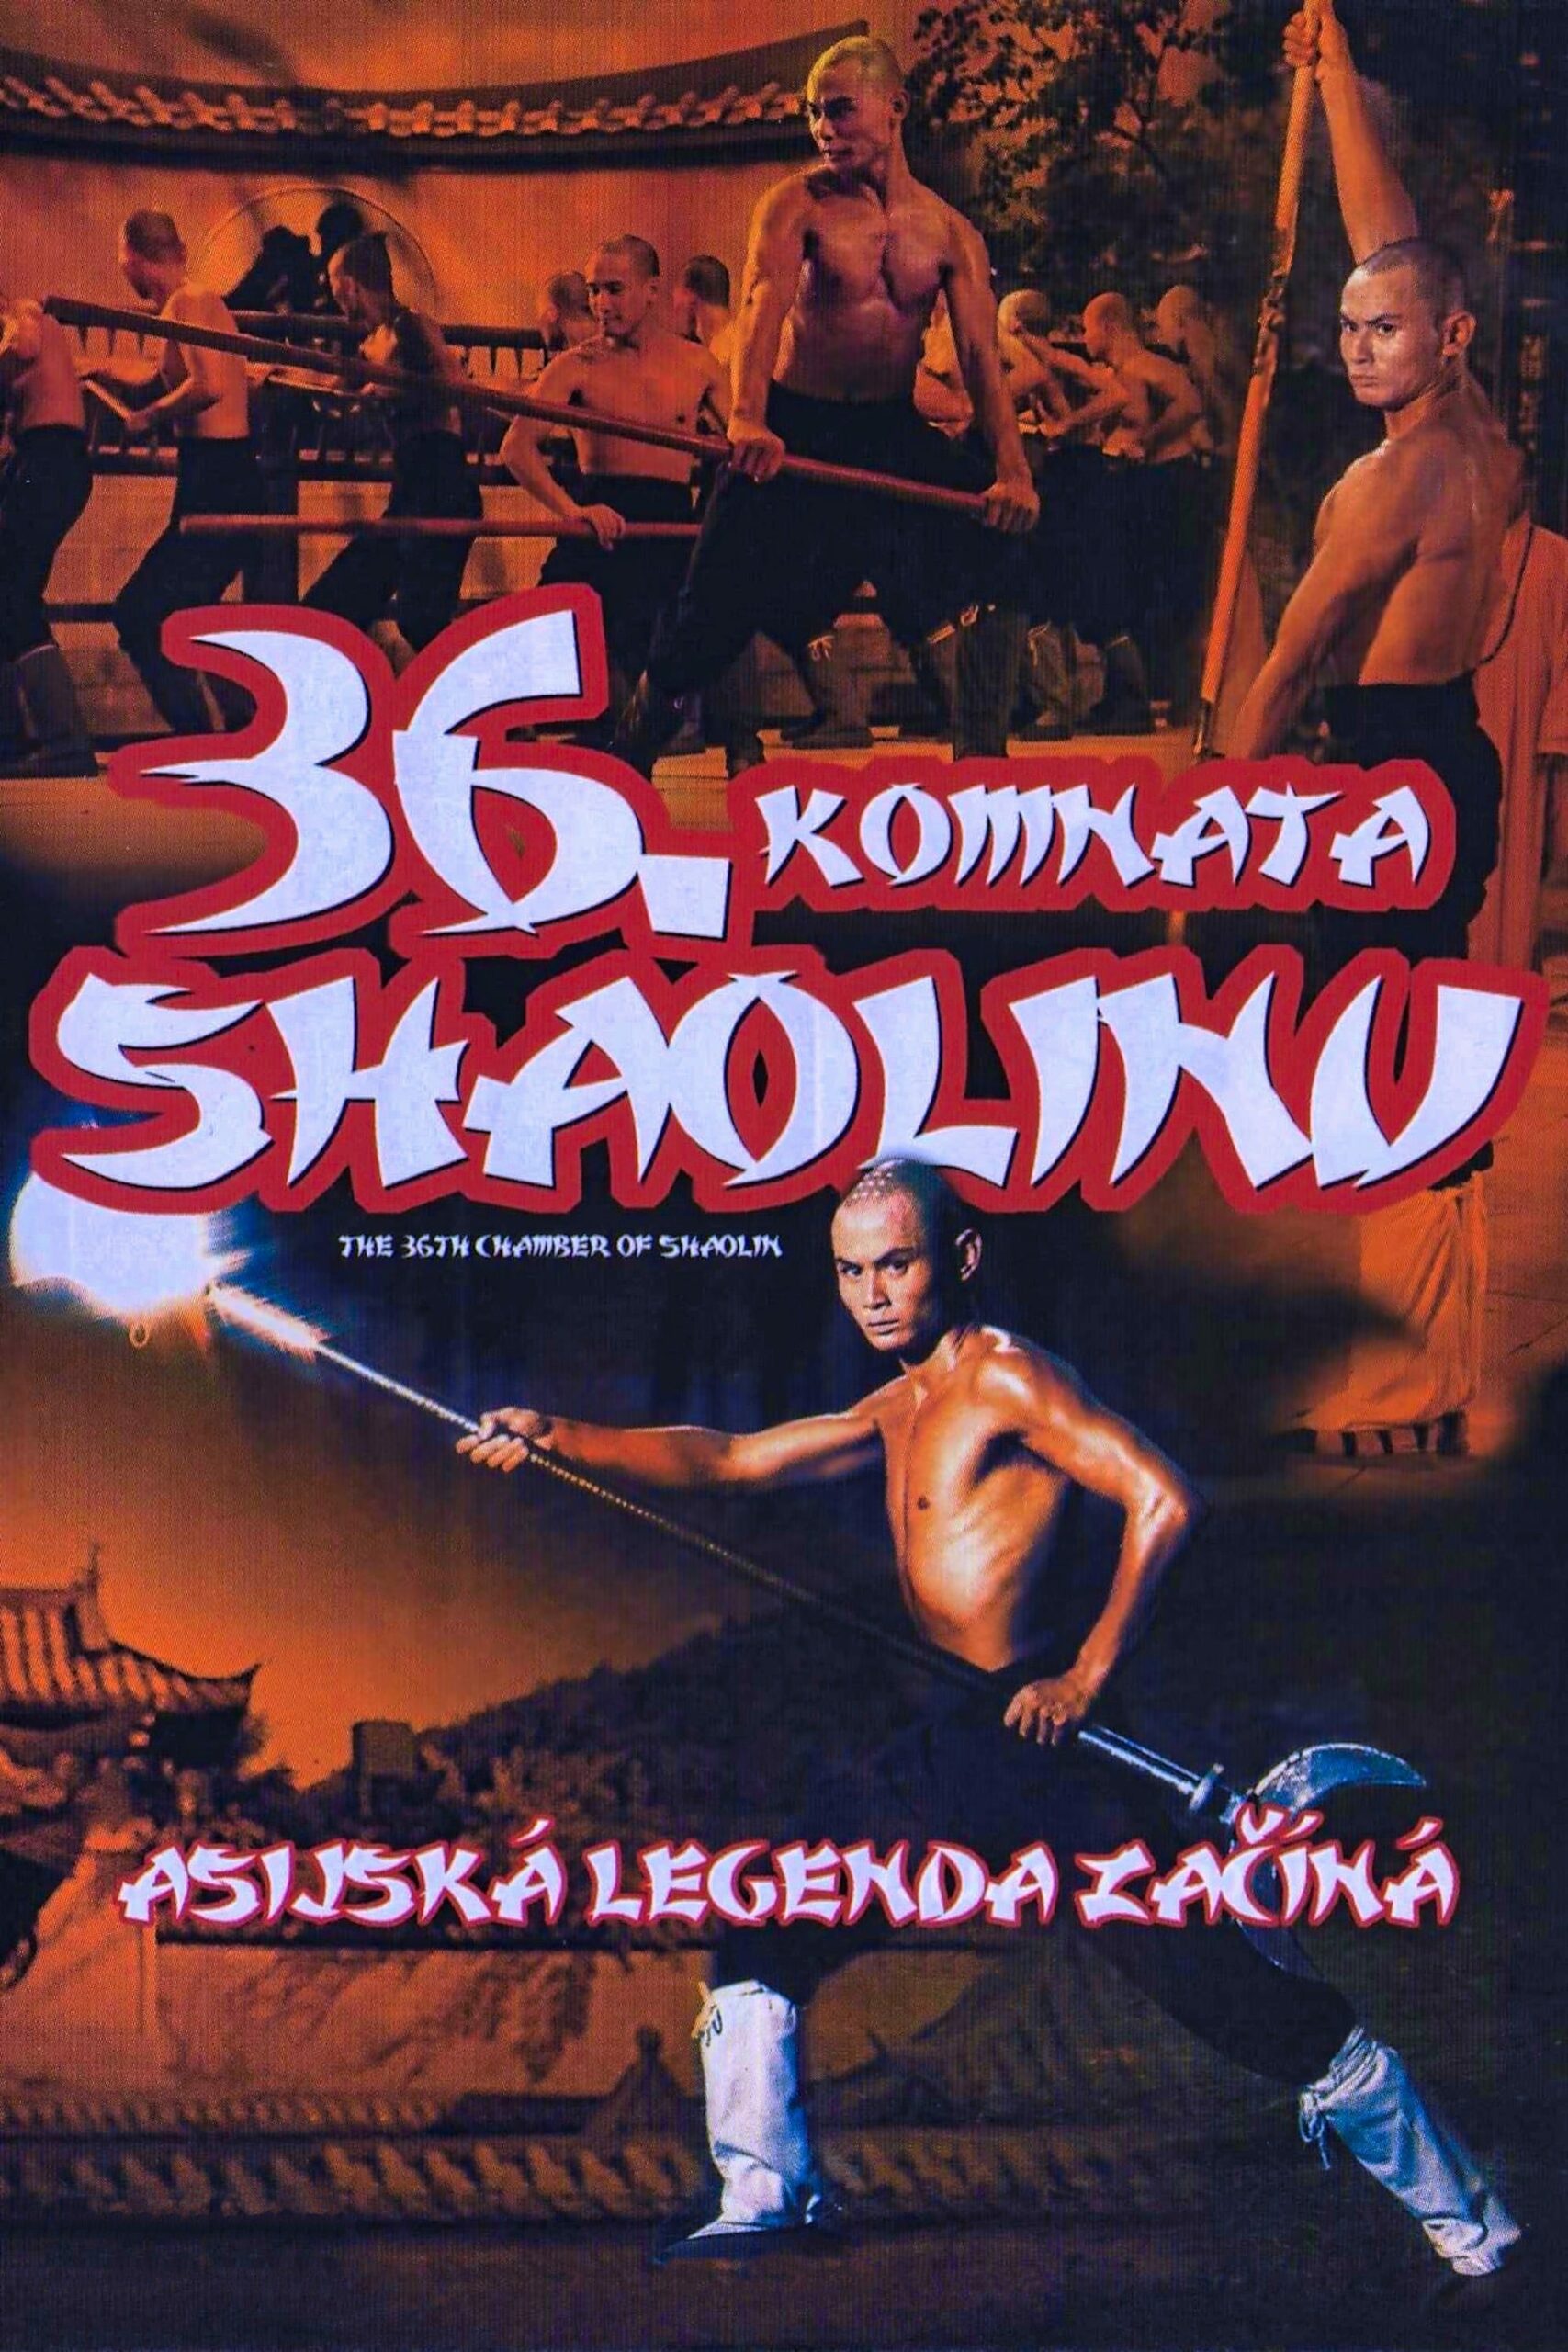 Plakát pro film “36. komnata Shaolinu”